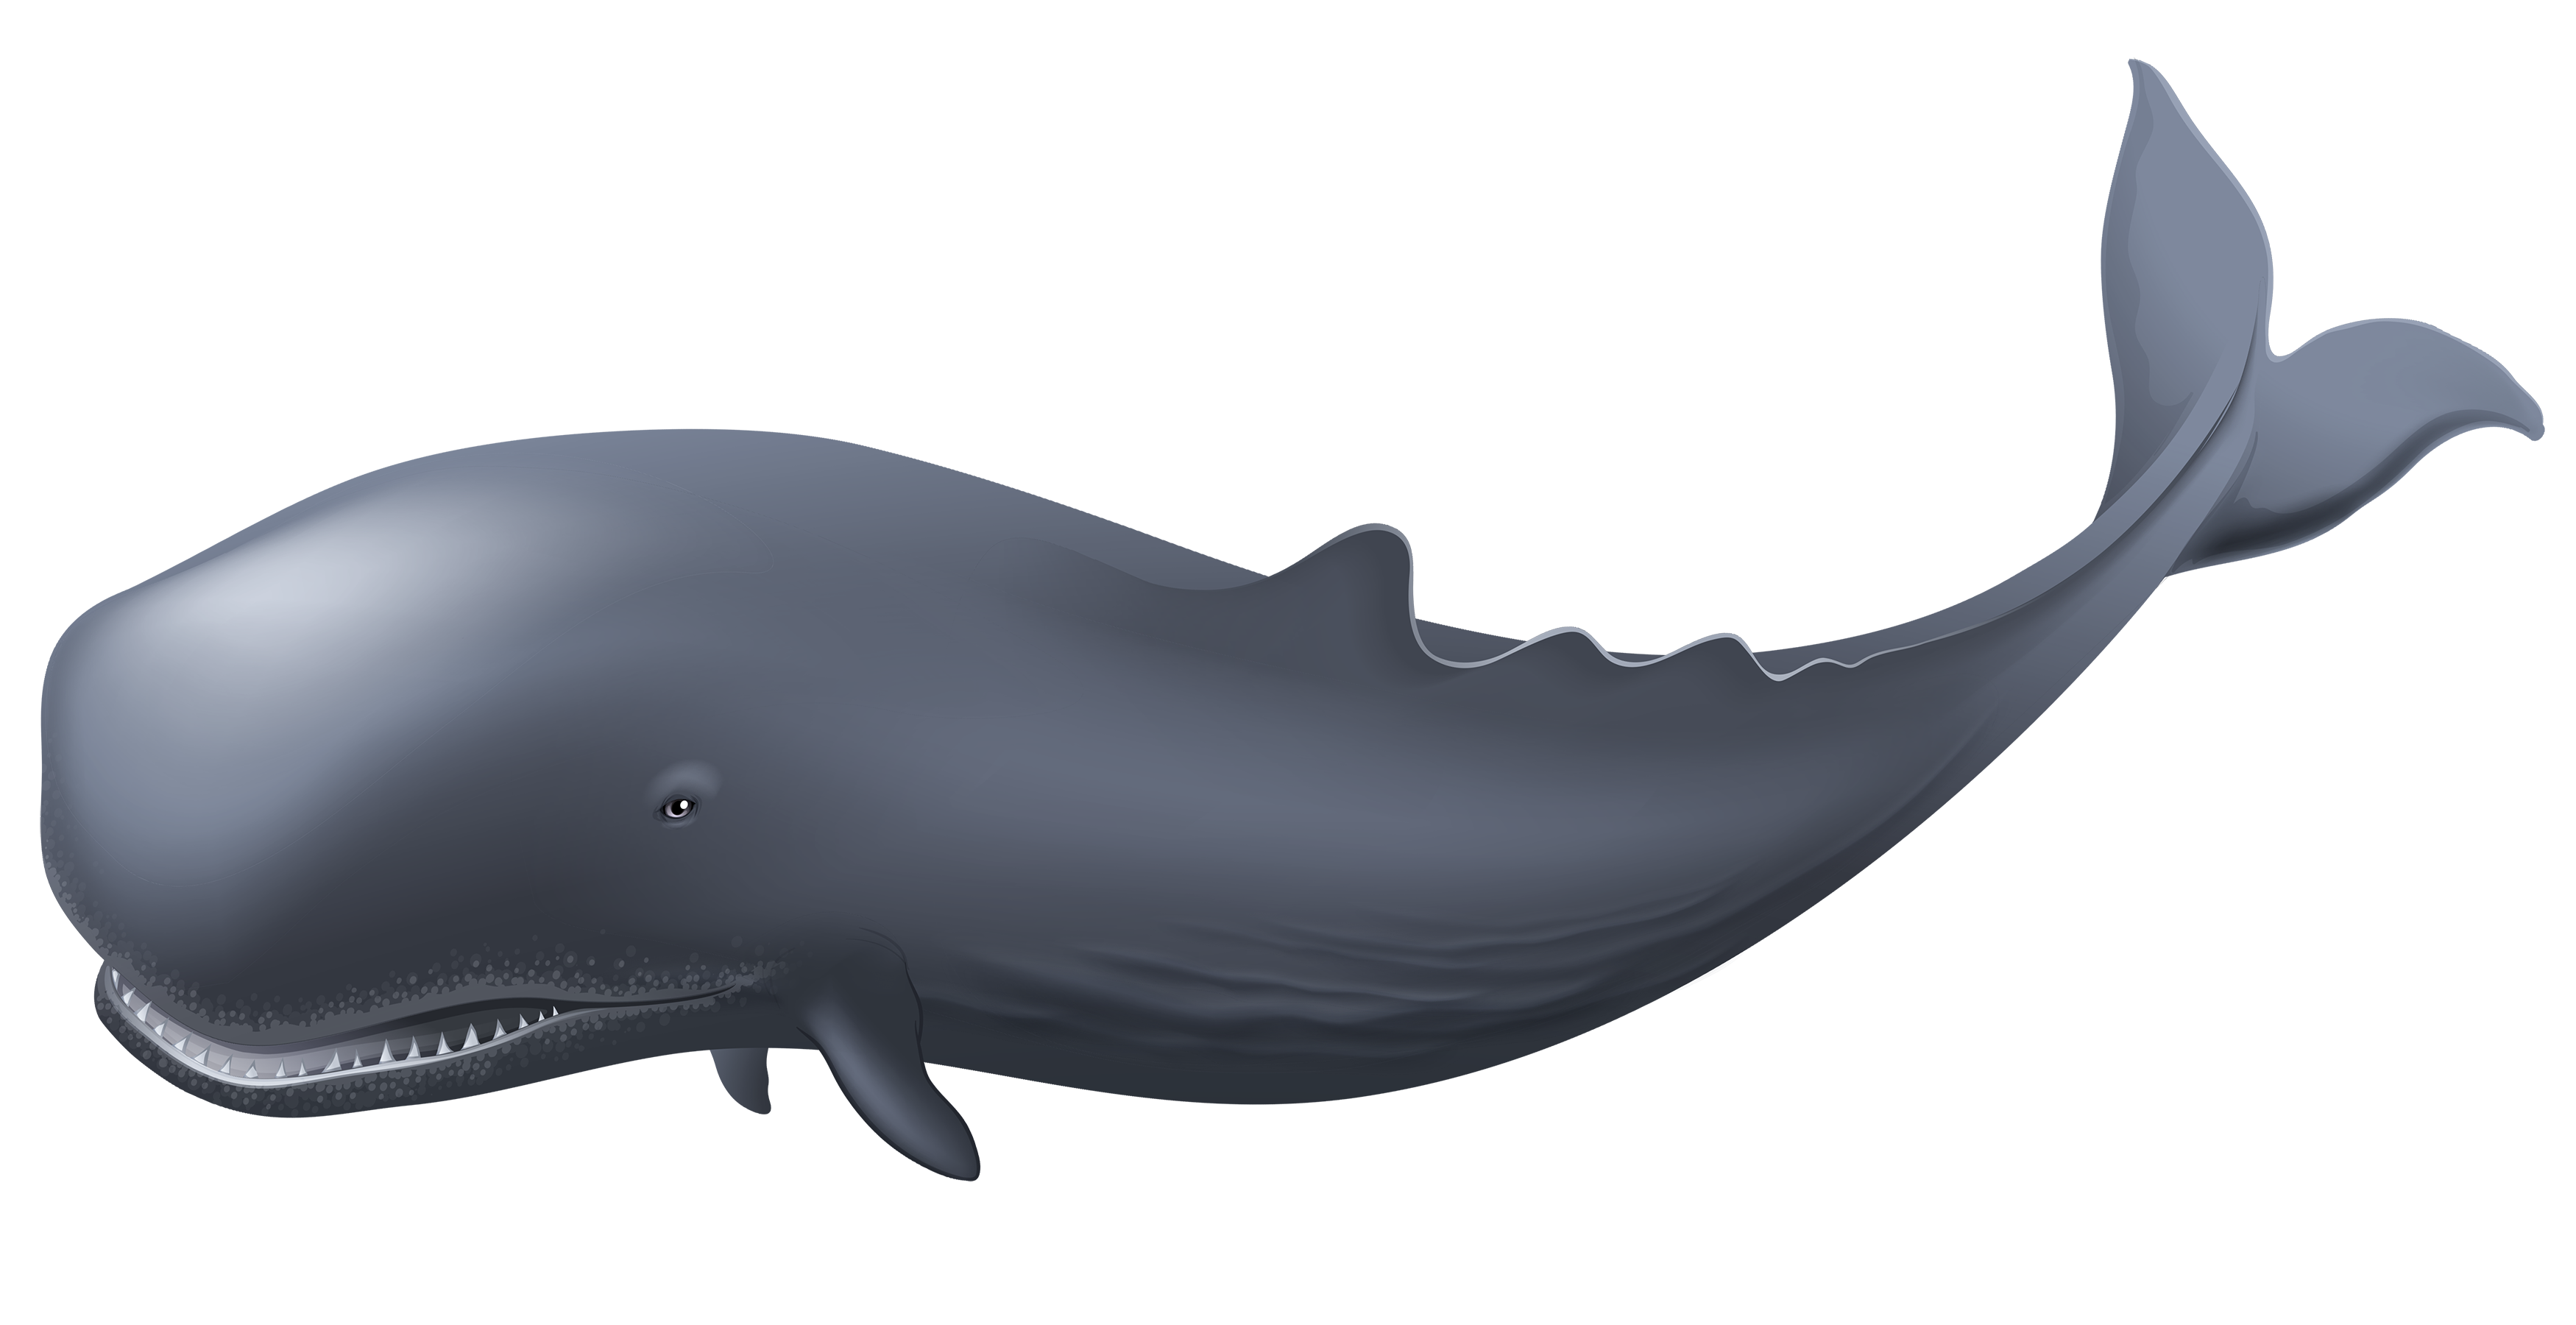 Sperm whale (Physeter macroce